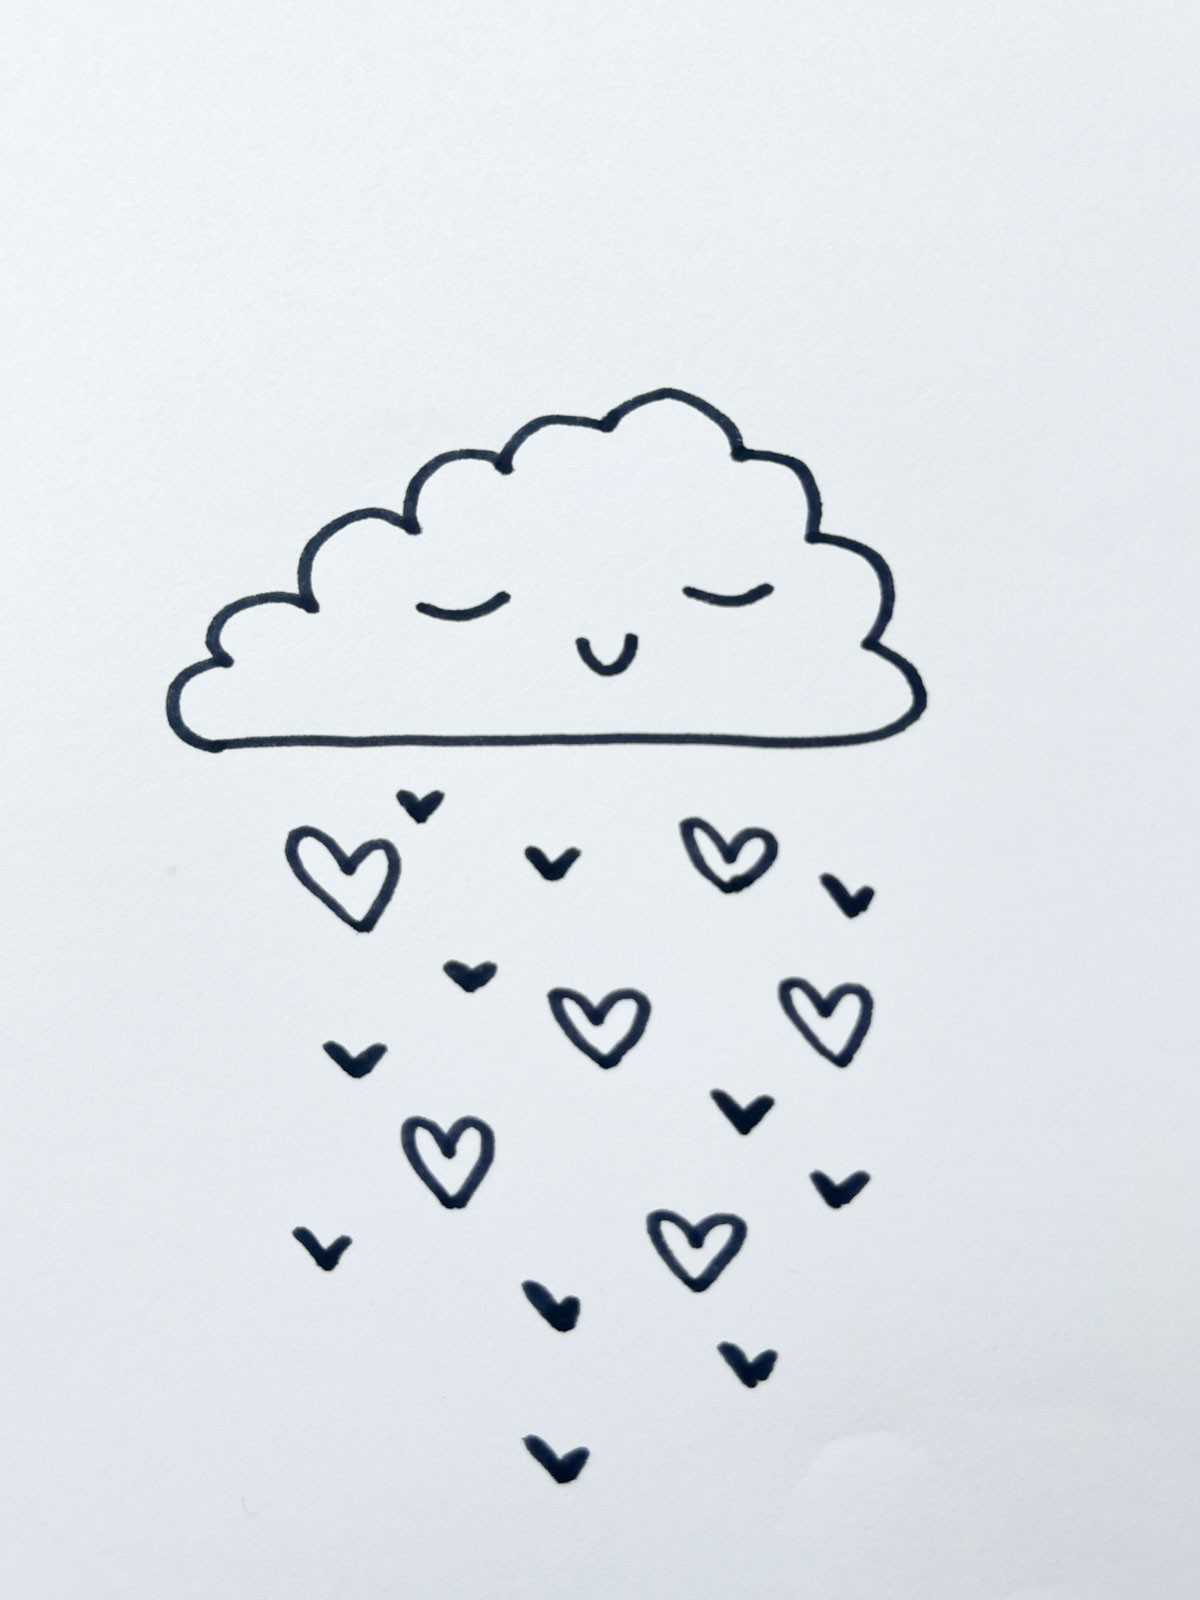 raining hearts drawing